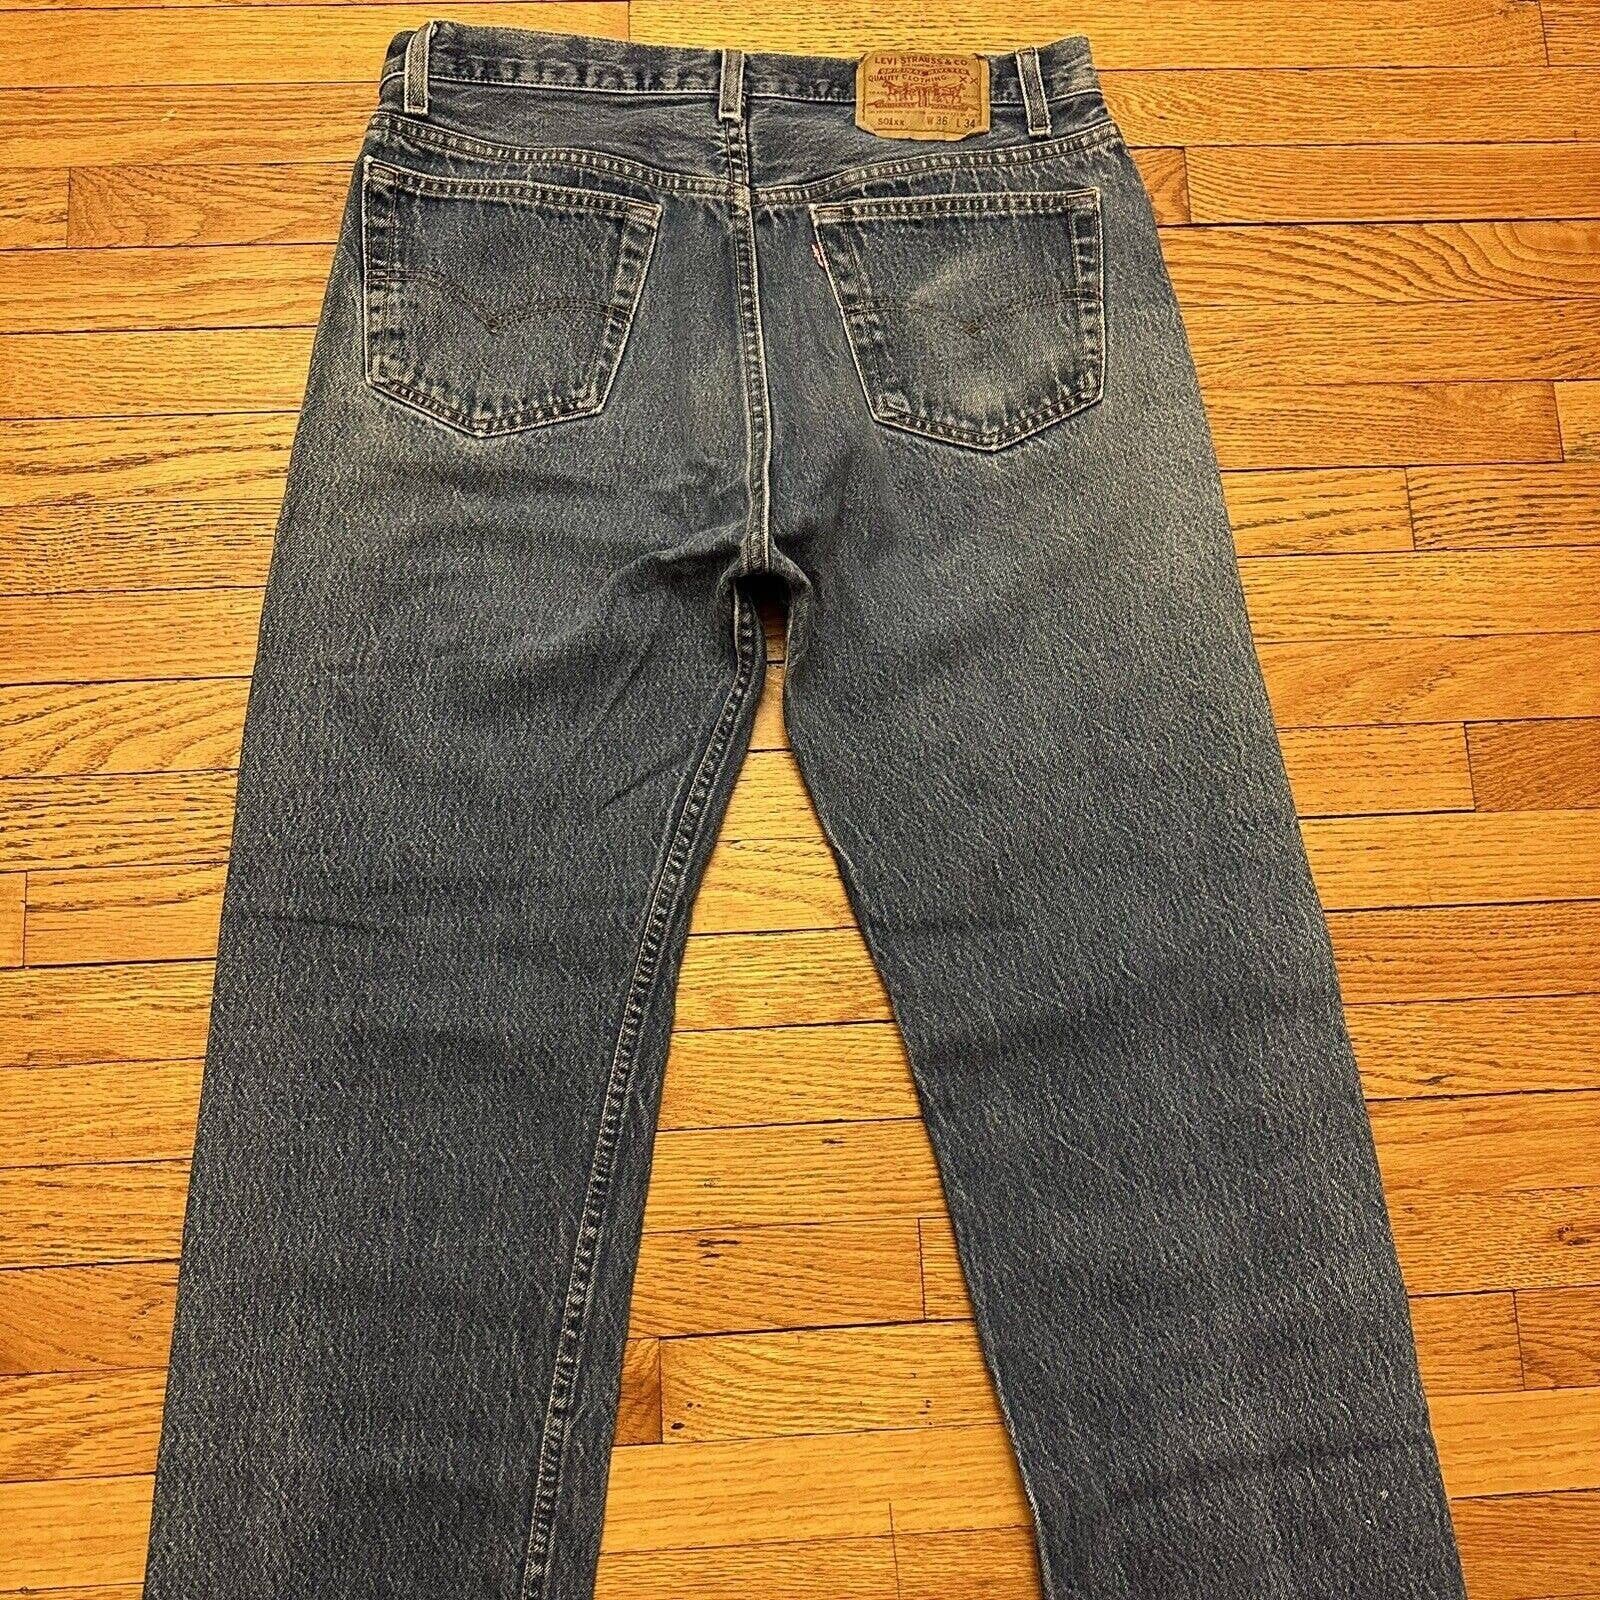 Vintage Vintage Levi’s 501 Blue Denim Jeans Size 36x34 Made In USA Size US 36 / EU 52 - 5 Thumbnail